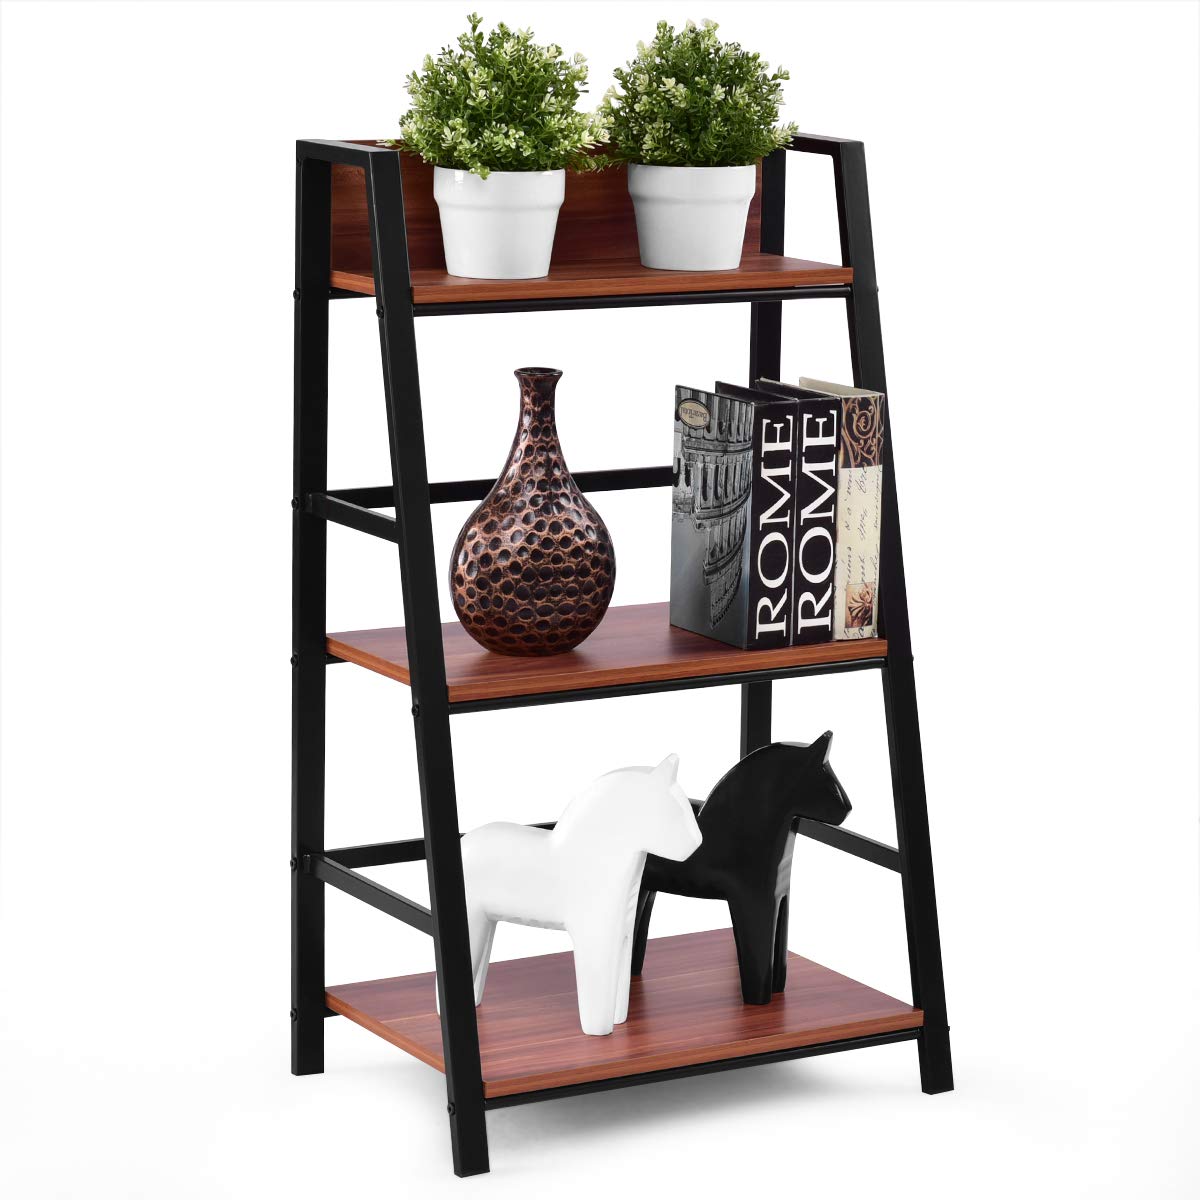 3-Tier Ladder Shelf Home Office Bookshelf Plant Display Stand Storage Shelves Multipurpose Corner Shelf Bookcase